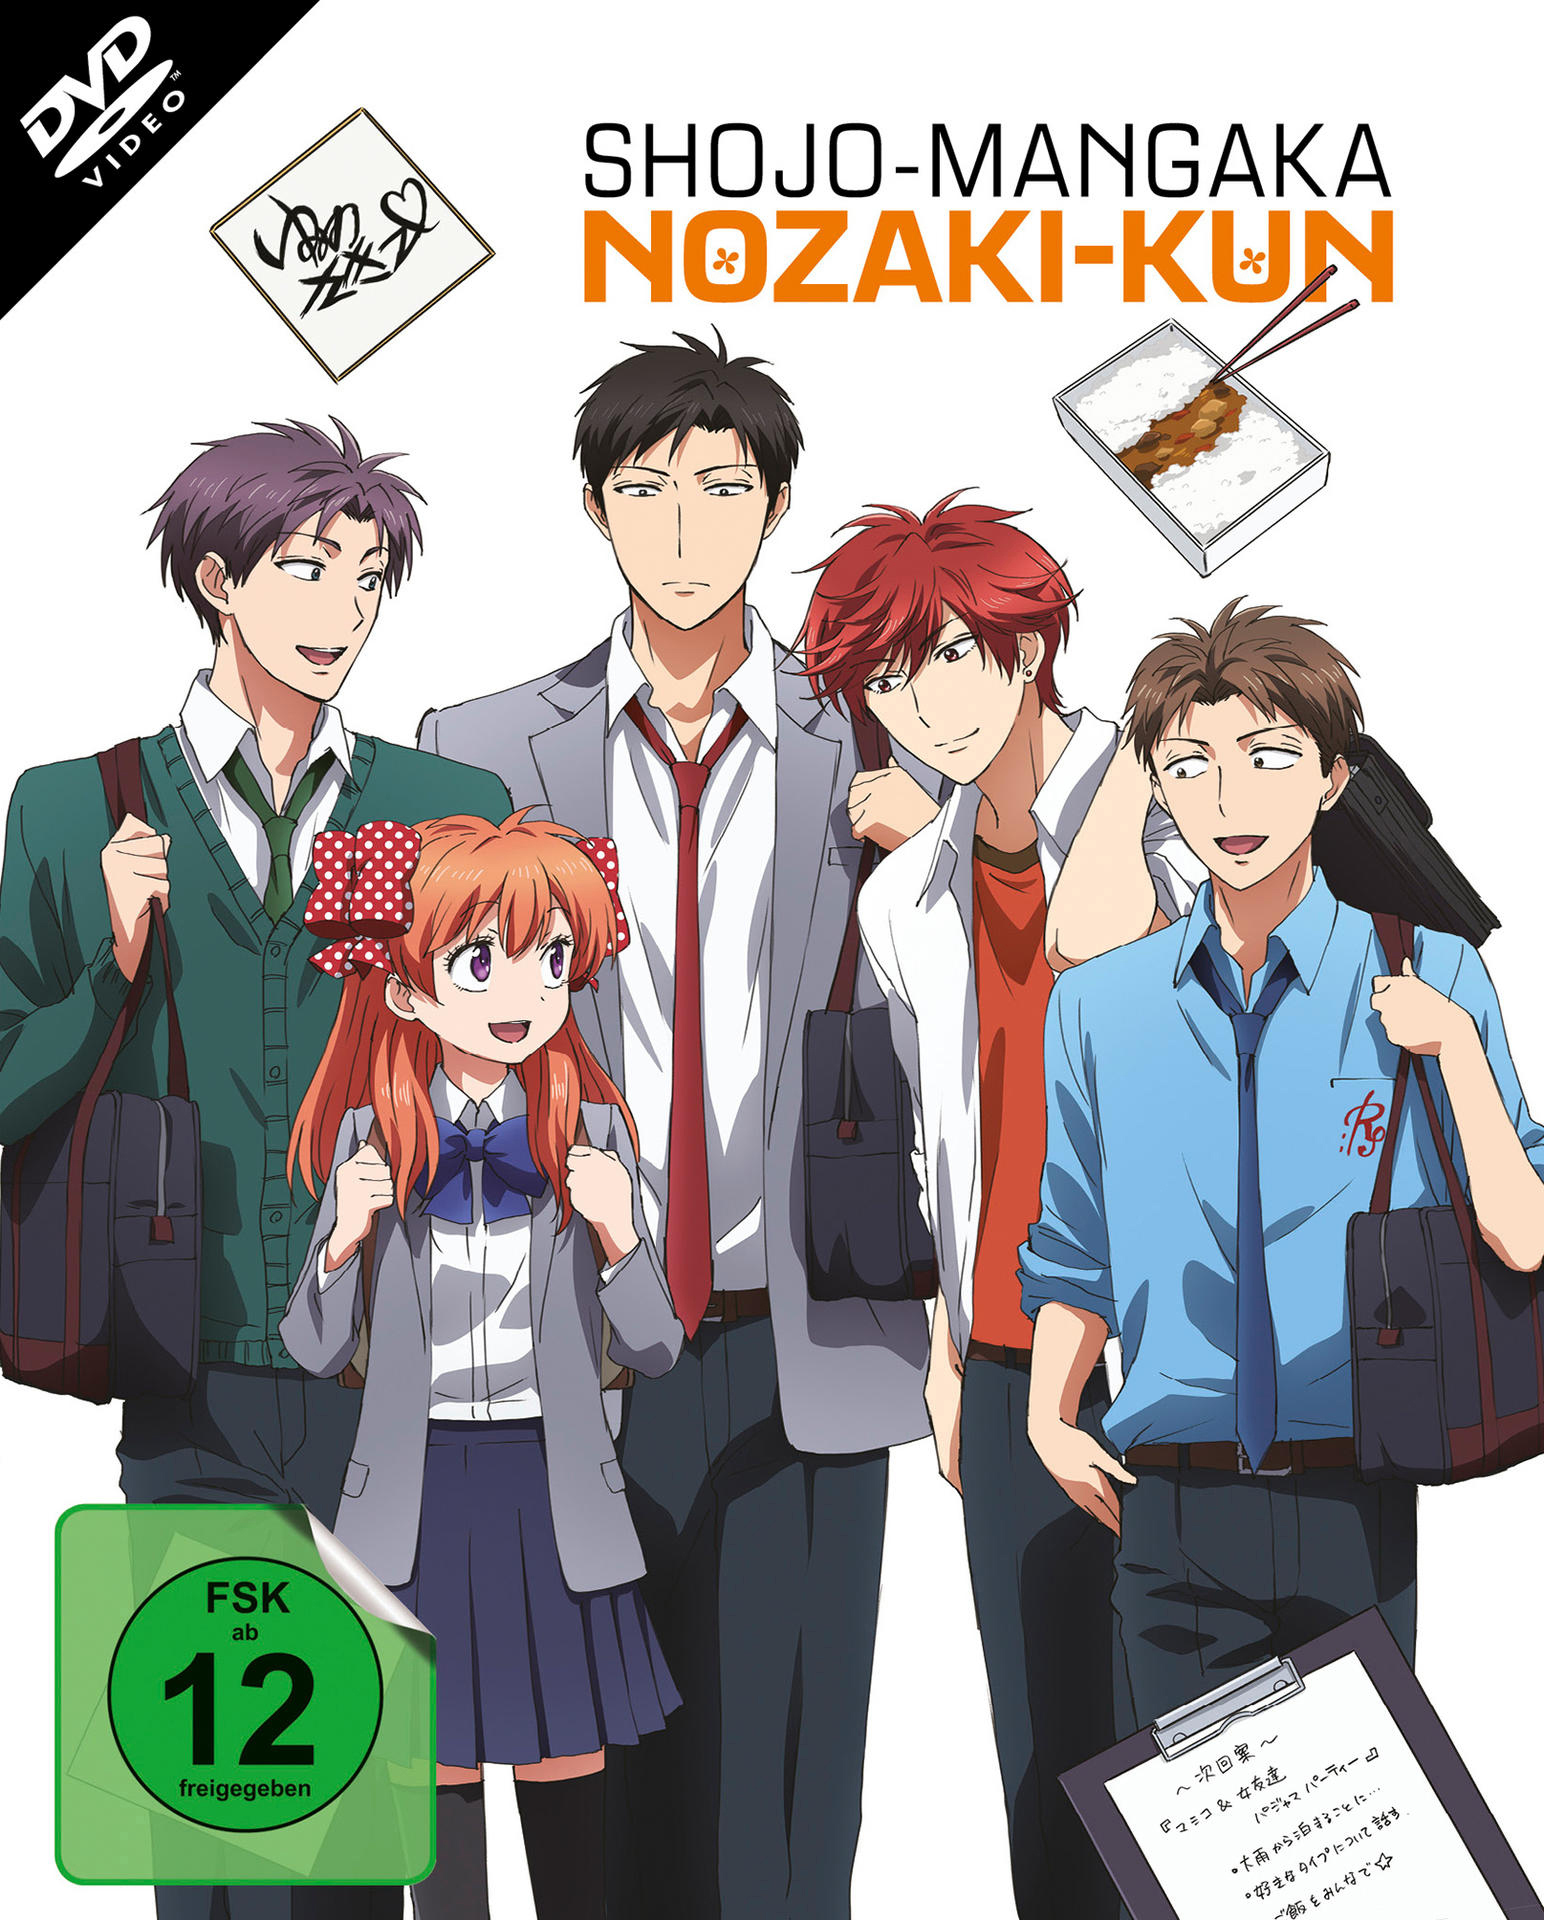 Nozaki-Kun Shojo-Mangaka 9-12) Vol. (Ep. DVD 3